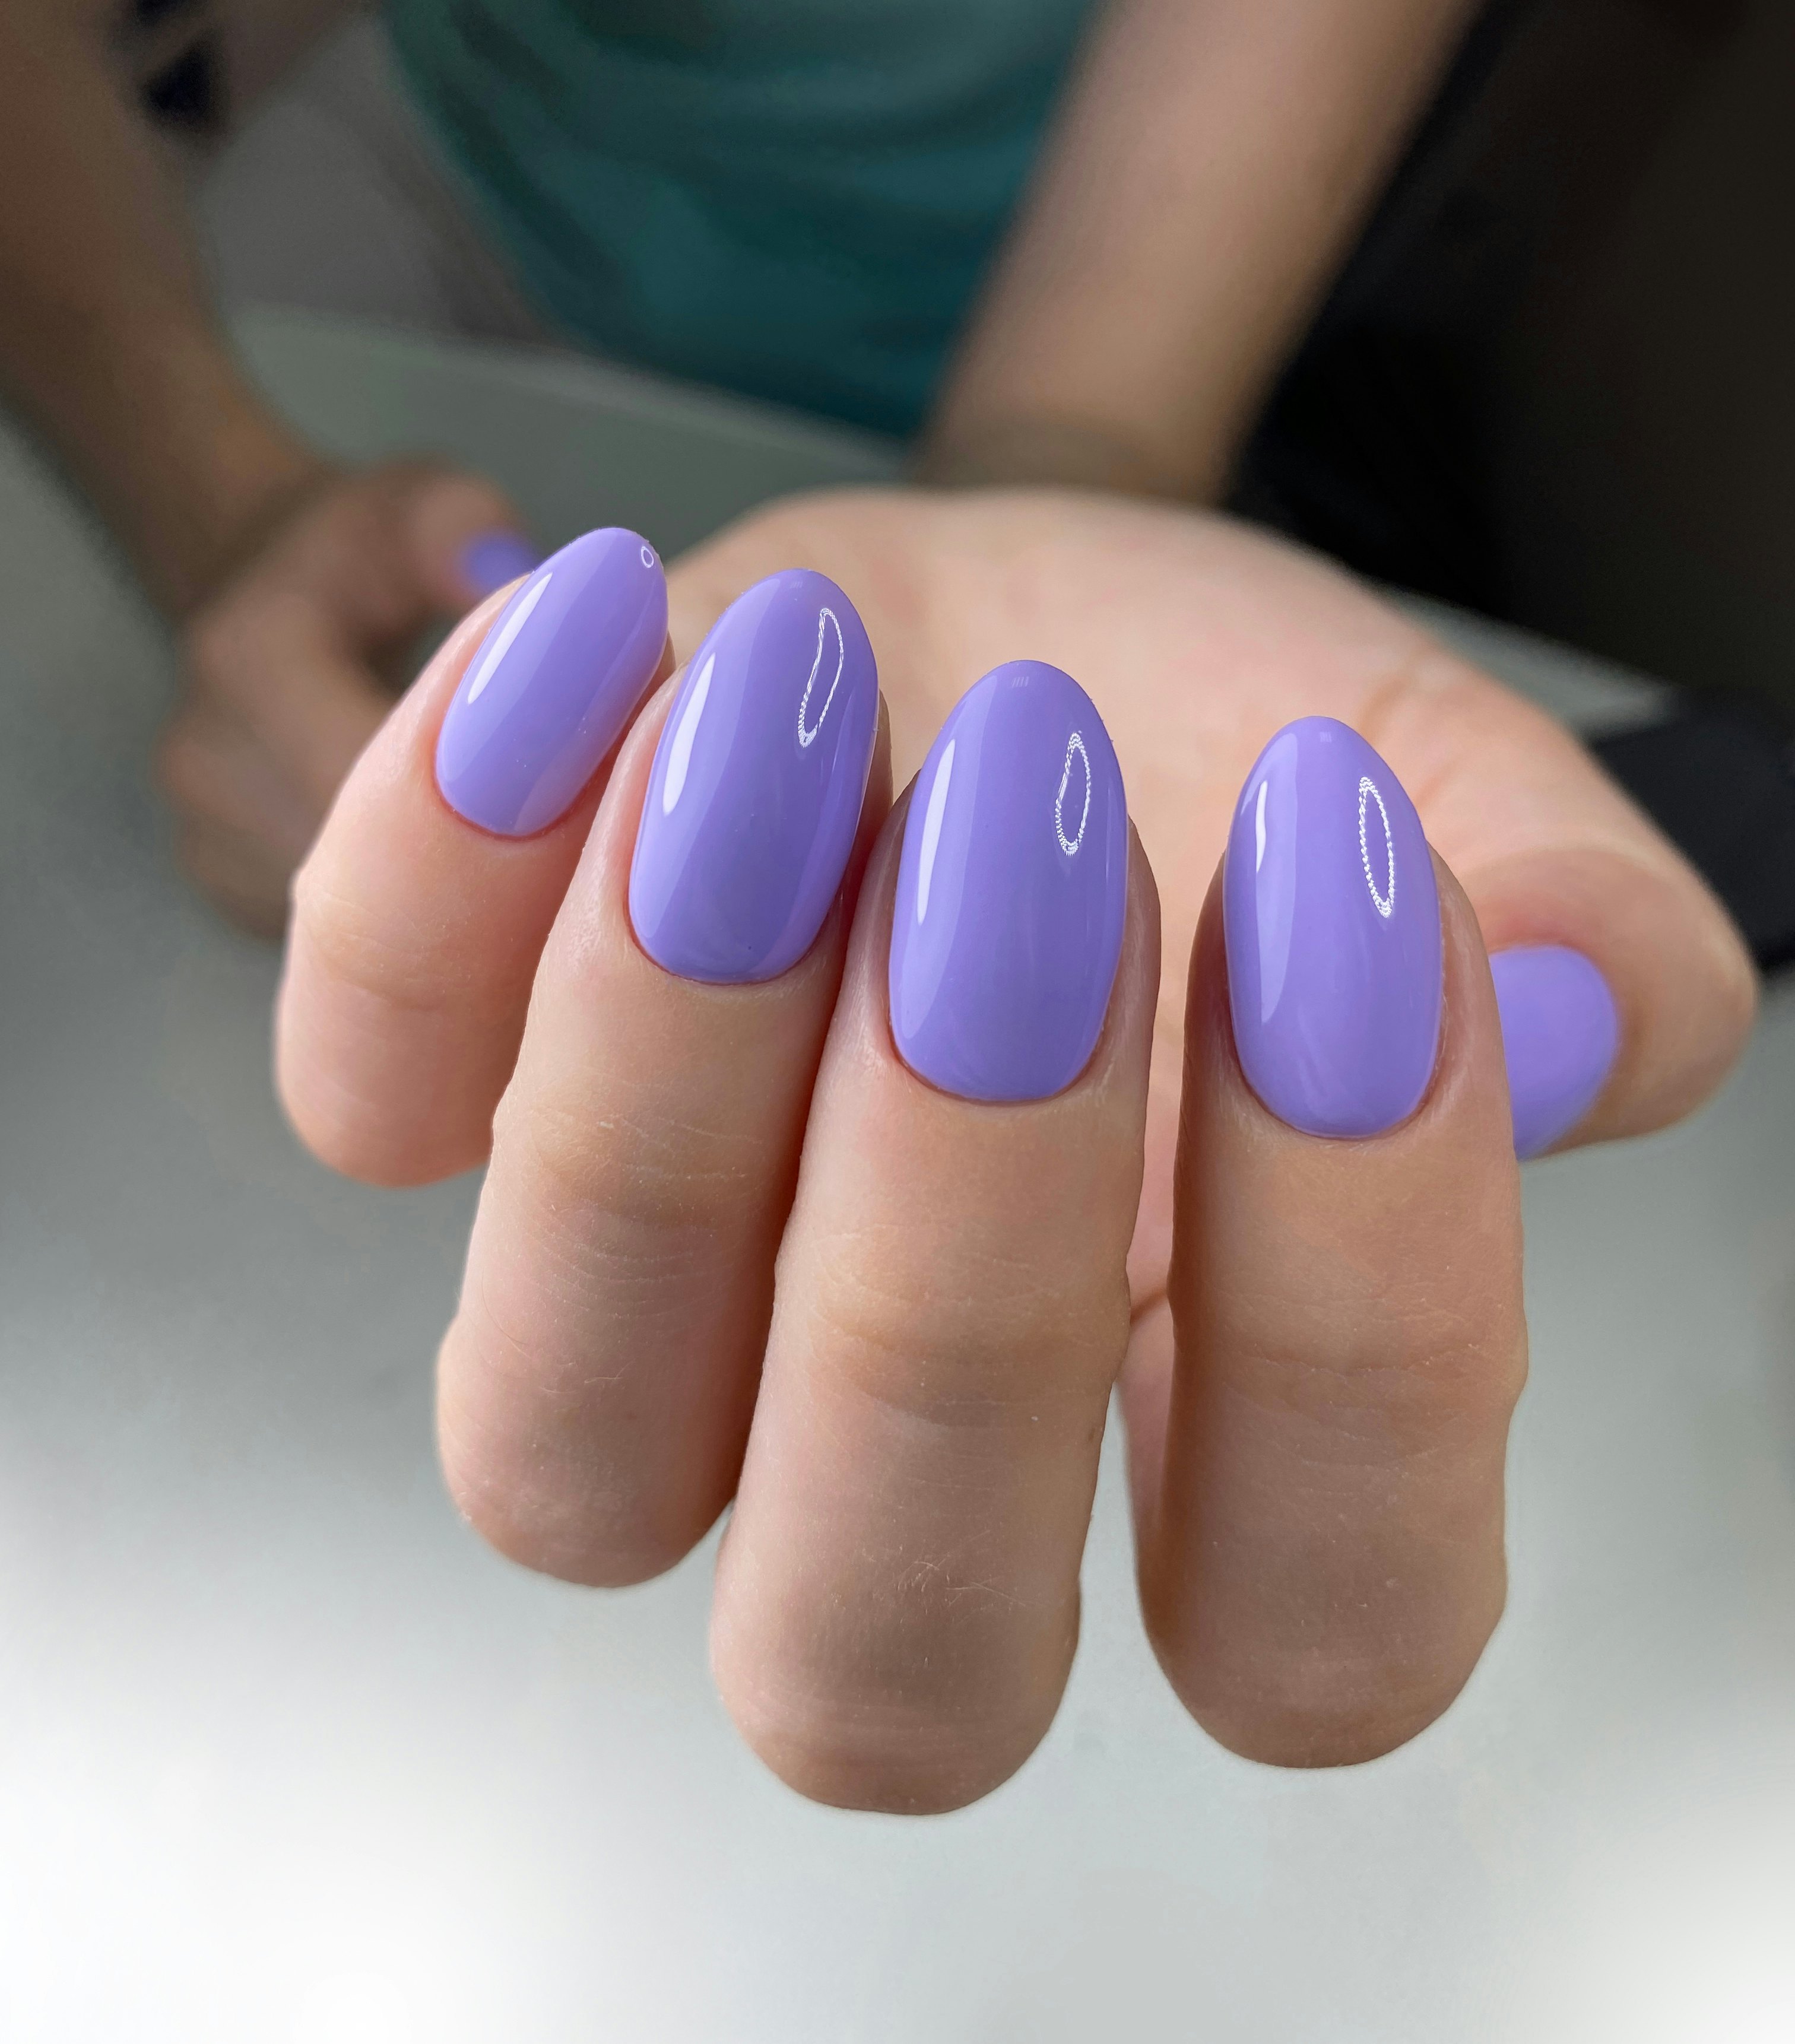 OPI 'One Heckla of a Color' | Lavender nails, Lavender nail polish, Gel  nails